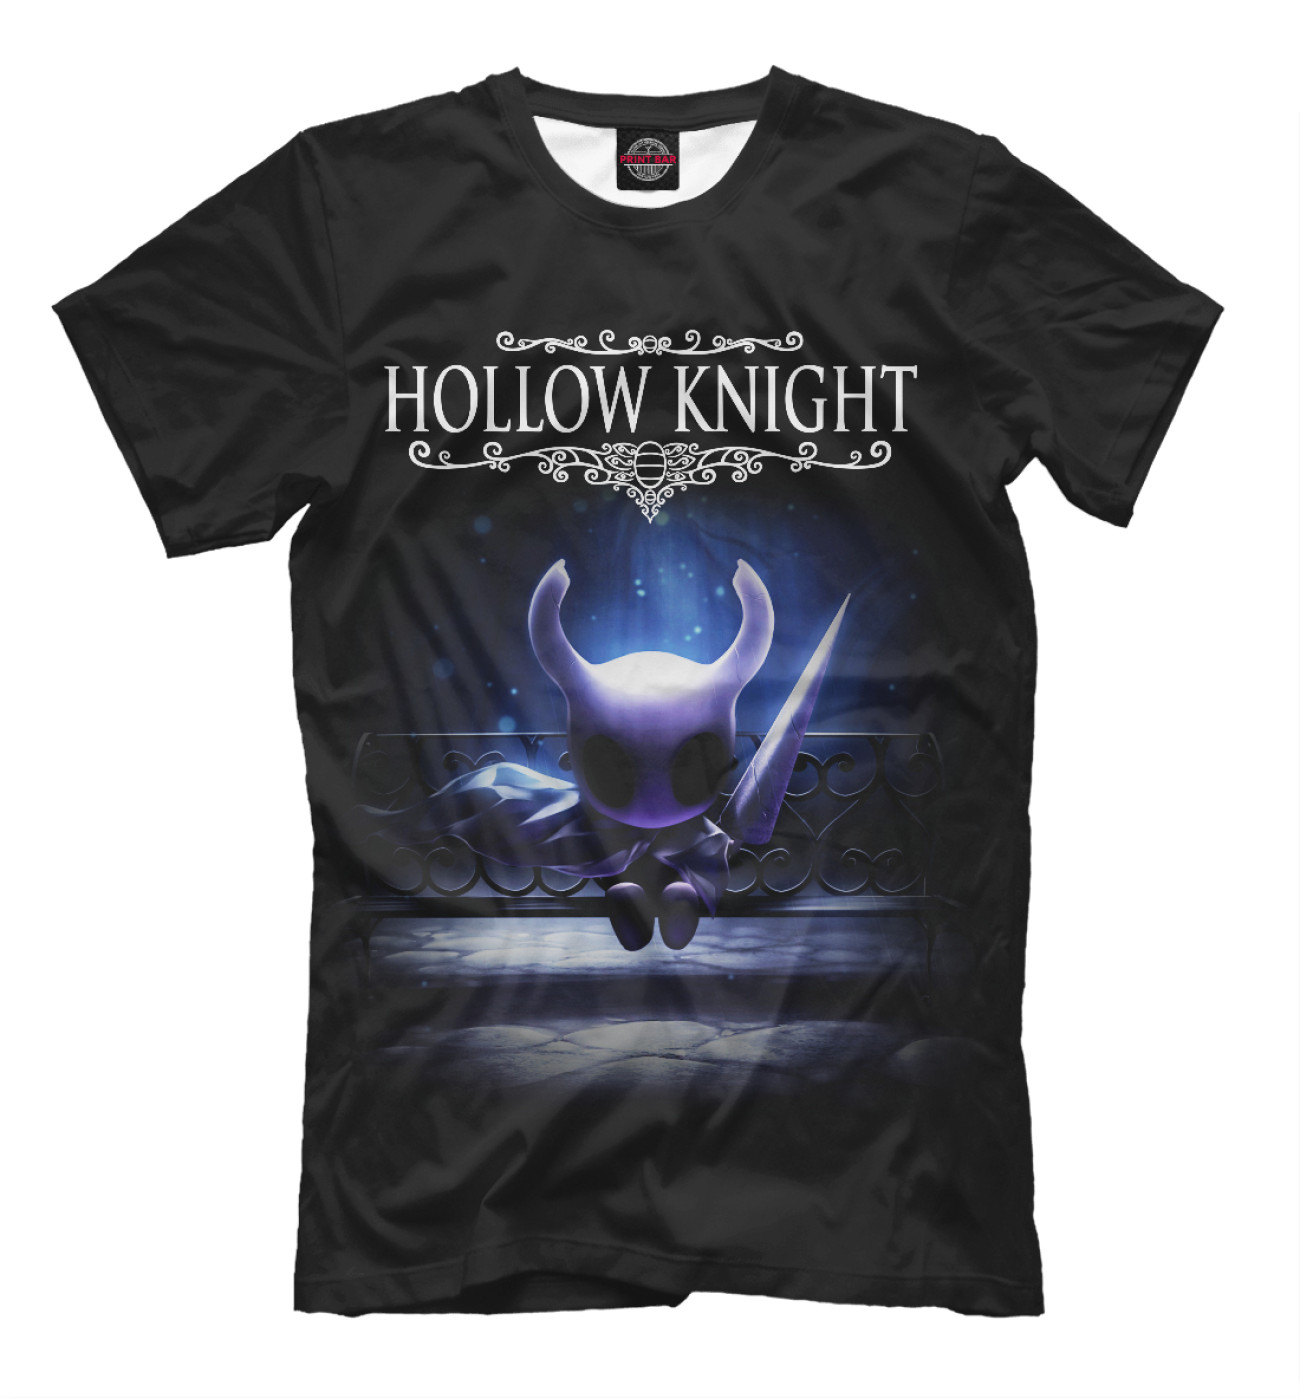 Мужская Футболка Hollow Knight, артикул: RPG-716413-fut-2